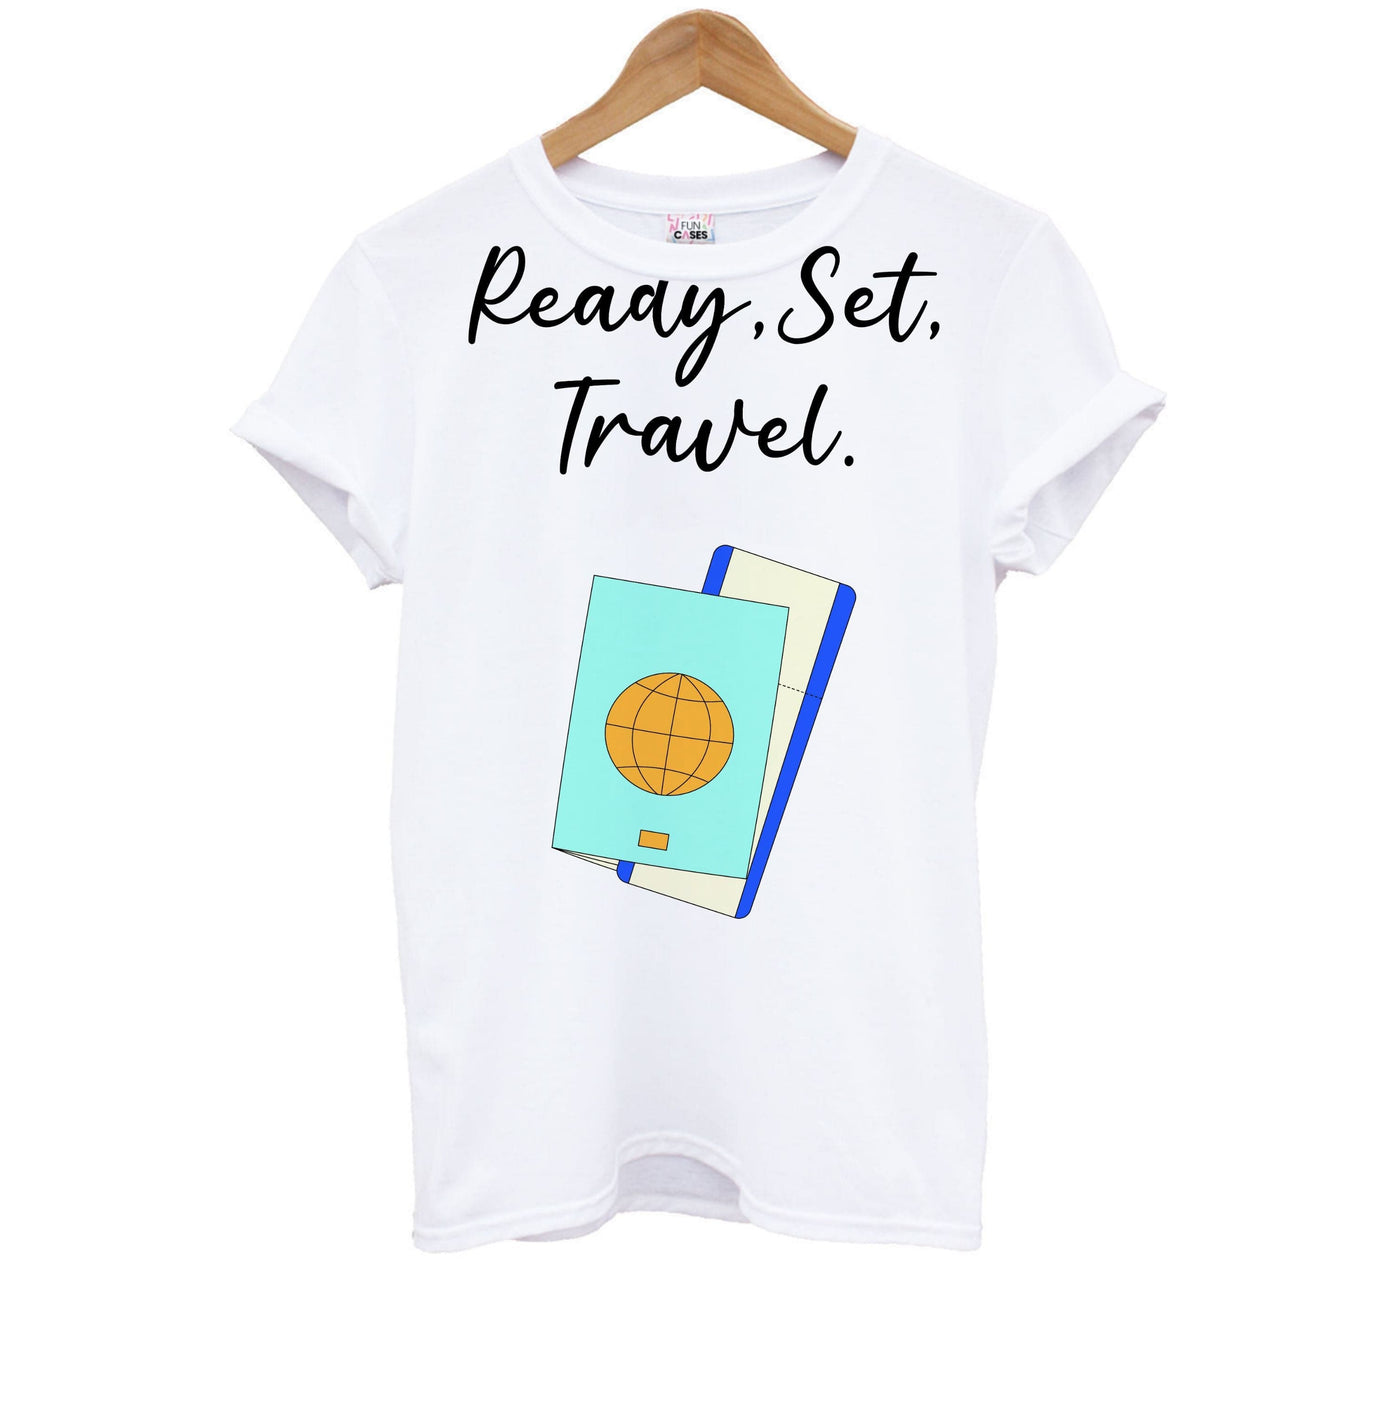 Ready Set Travel - Travel Kids T-Shirt